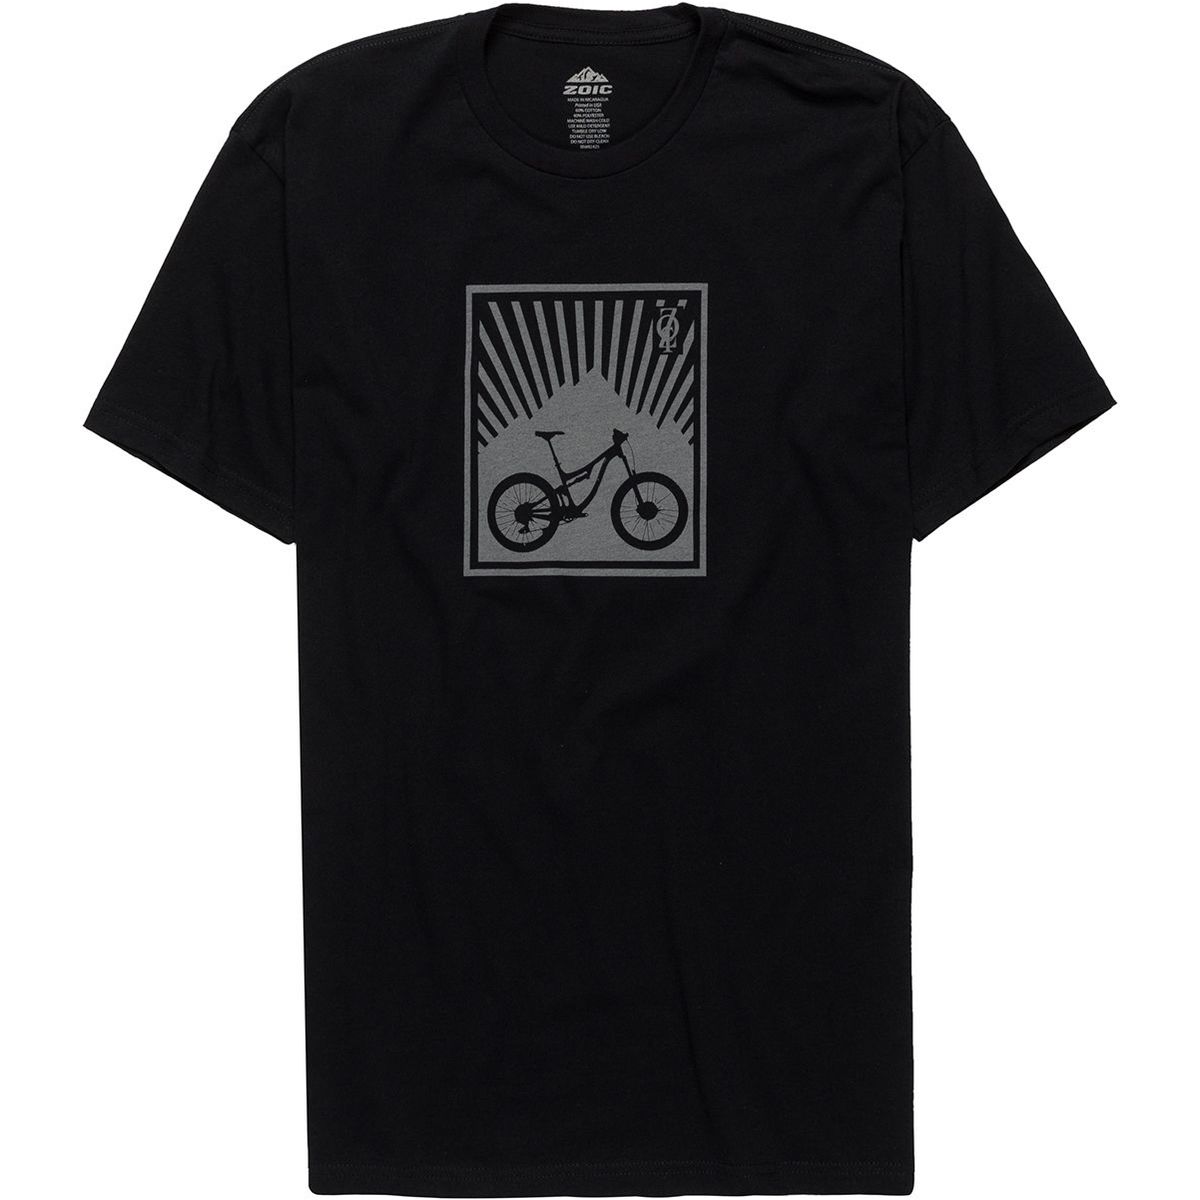 ZOIC Cycle T-Shirt - Men's